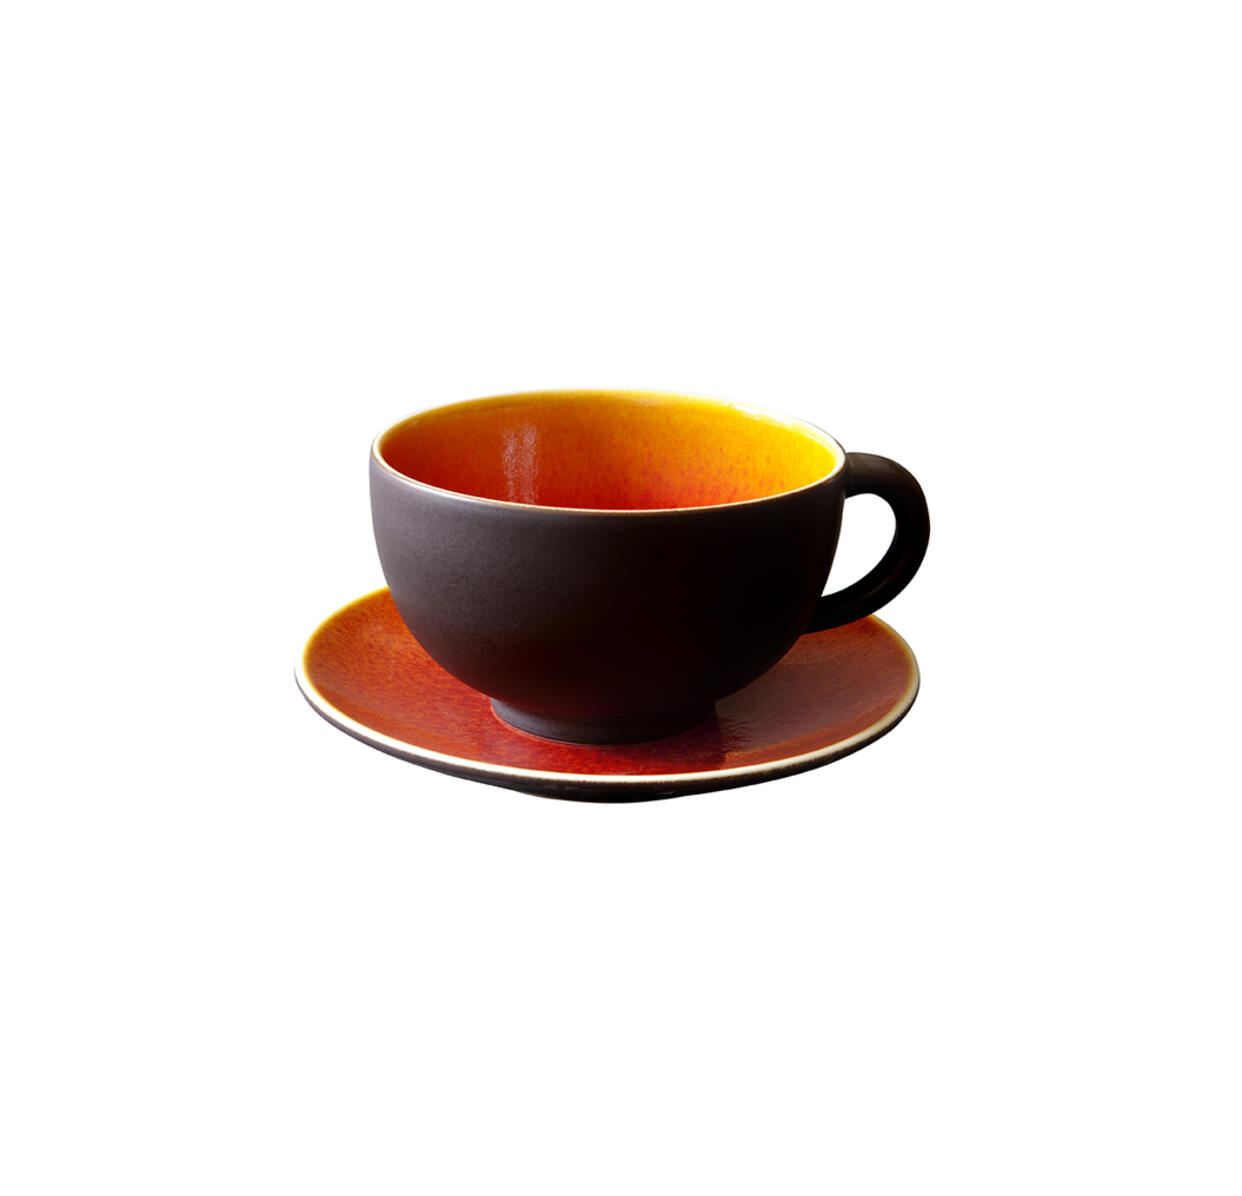 cup & saucer - m tourron orange ceramic manufacturer